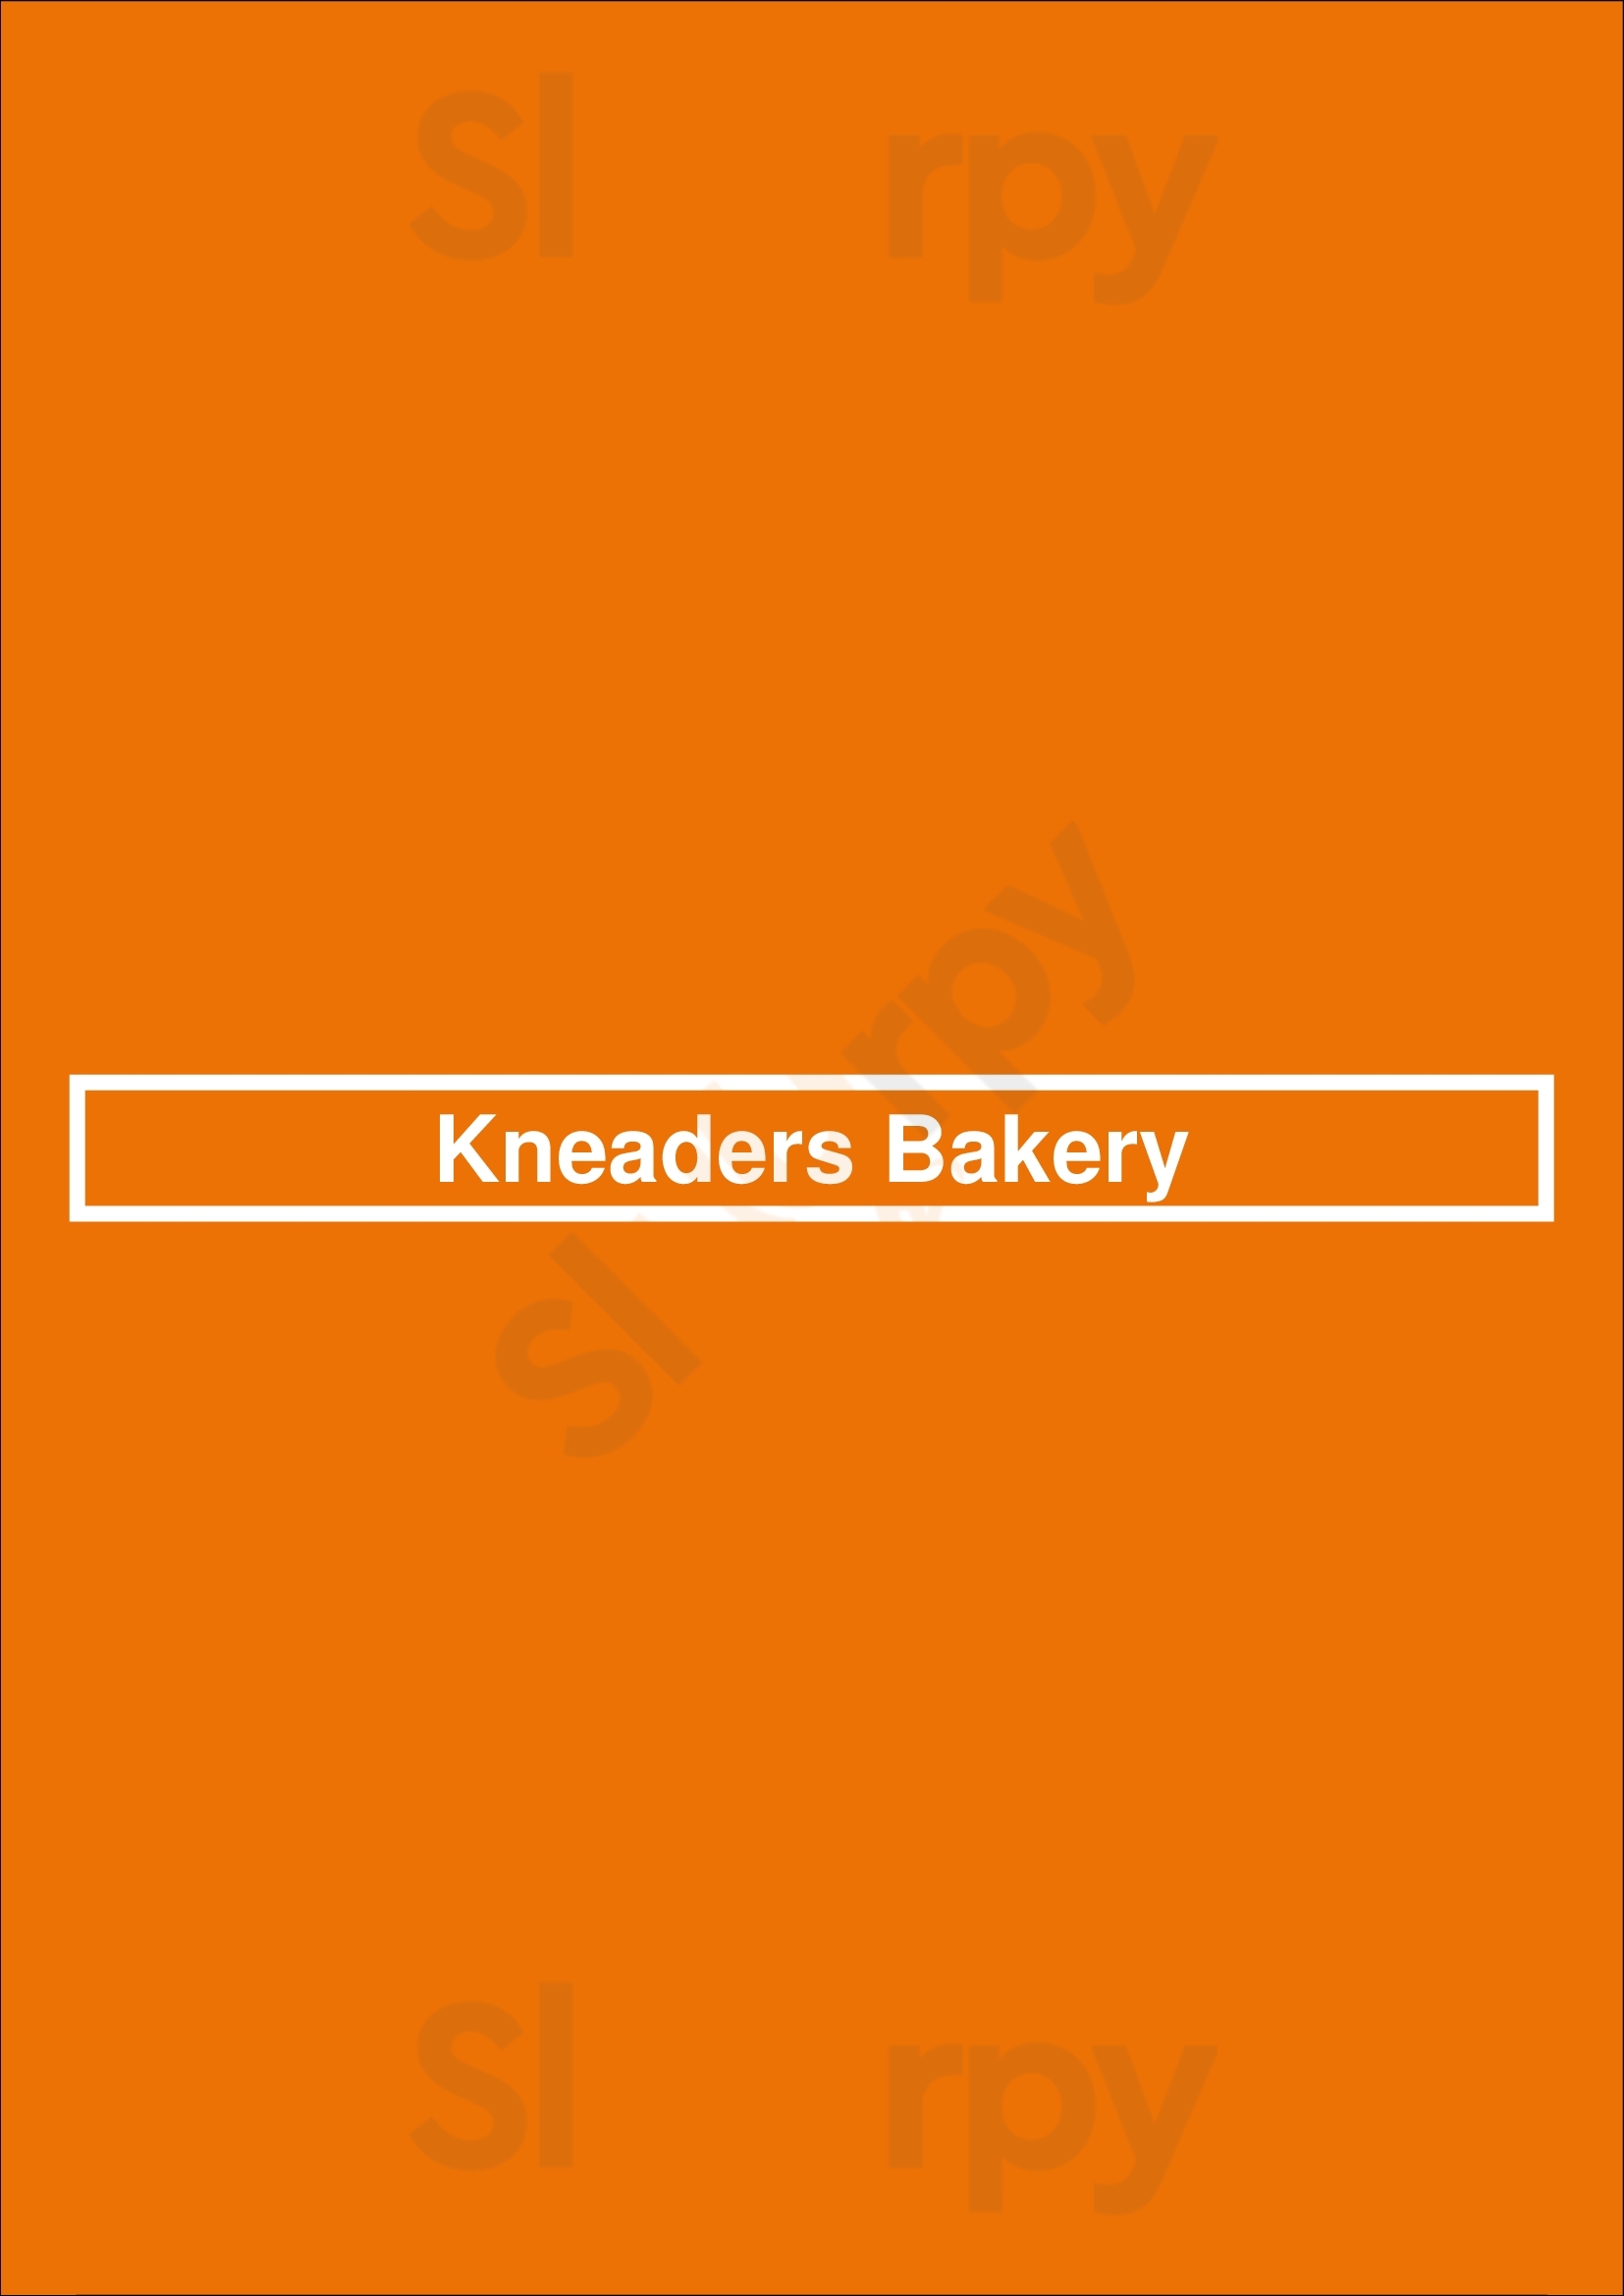 Kneaders Bakery & Cafe Colorado Springs Menu - 1